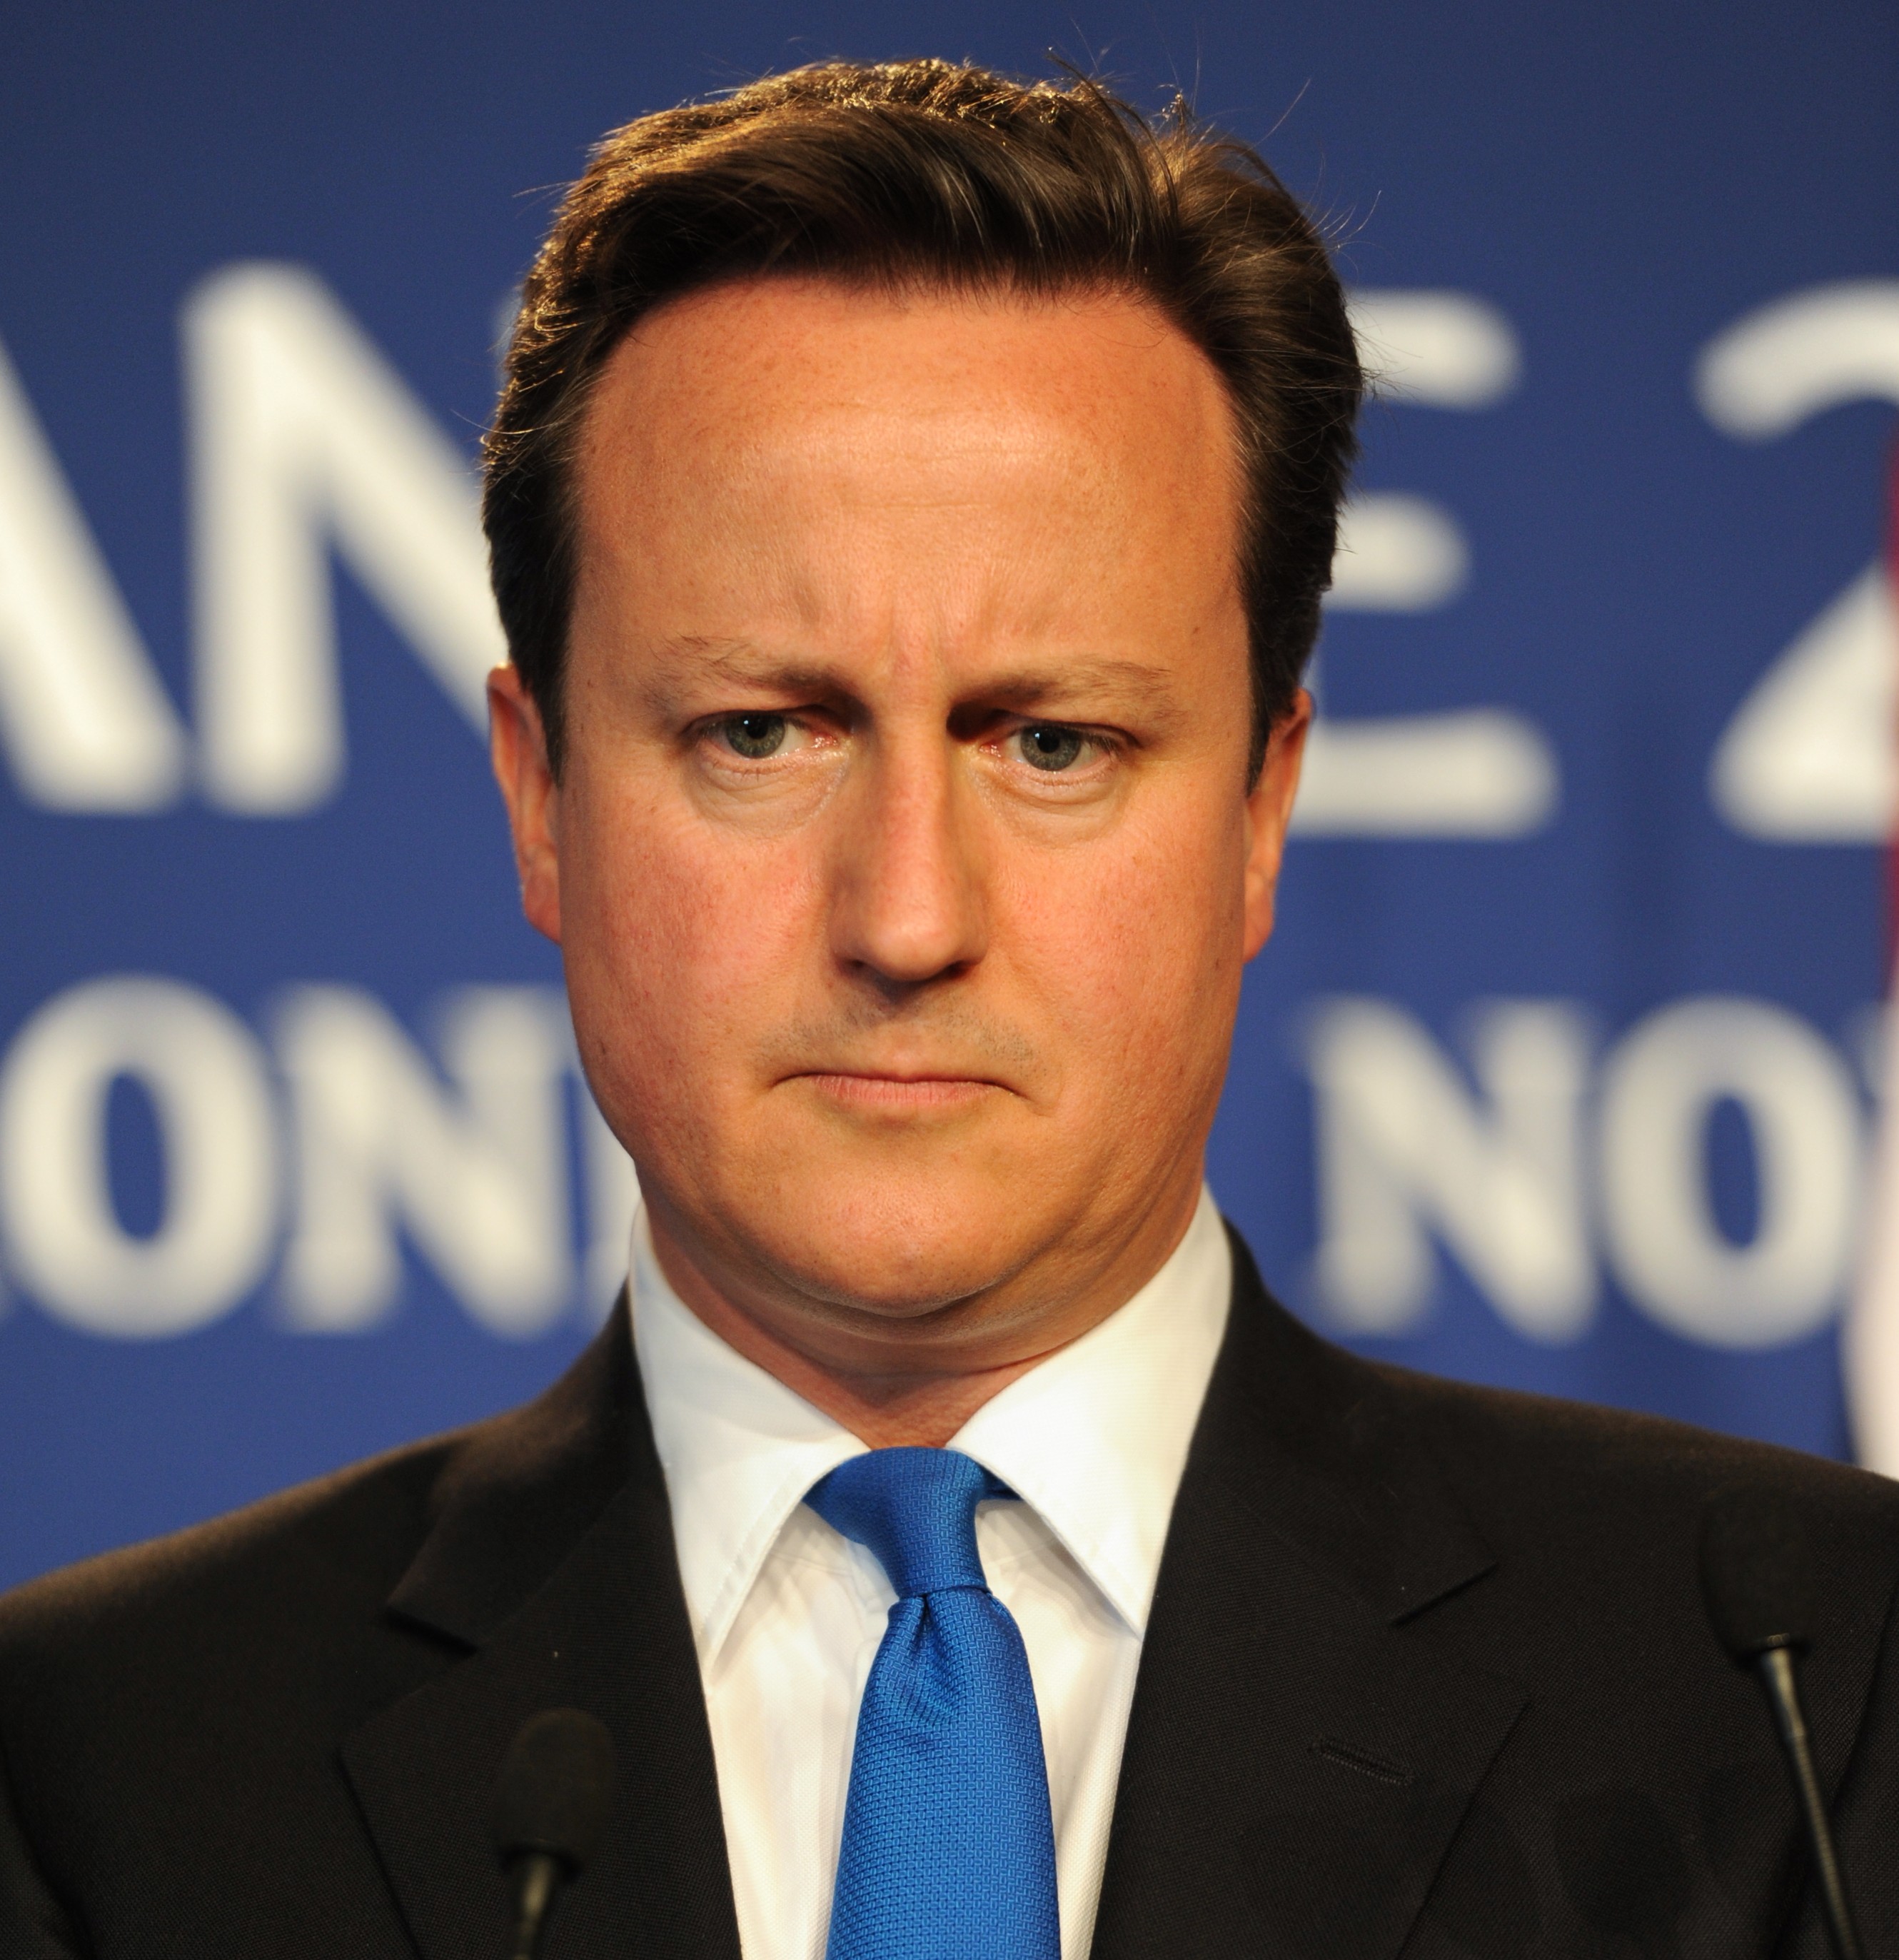 David Cameron steps down following Brexit vote